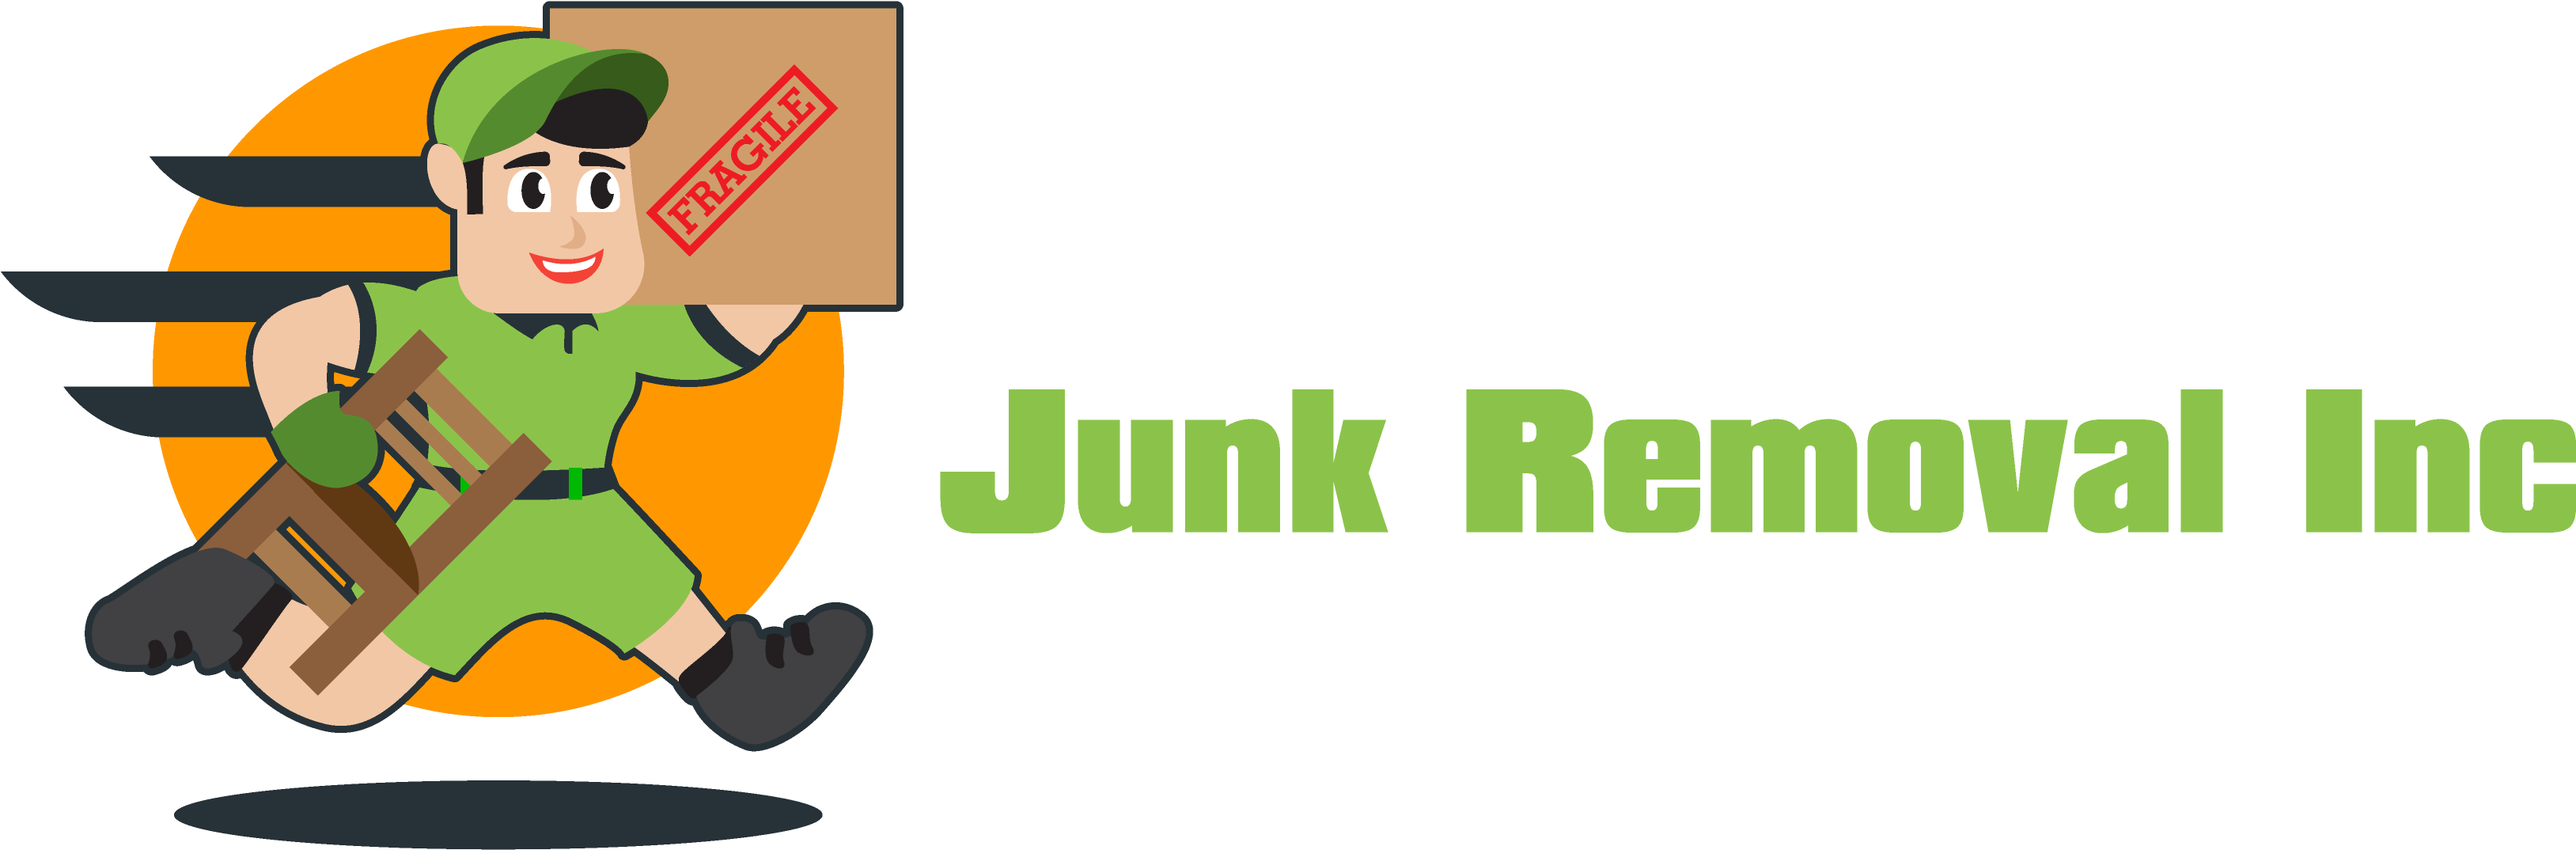 Junk Removal Inc - Sudbury (3369x1135)